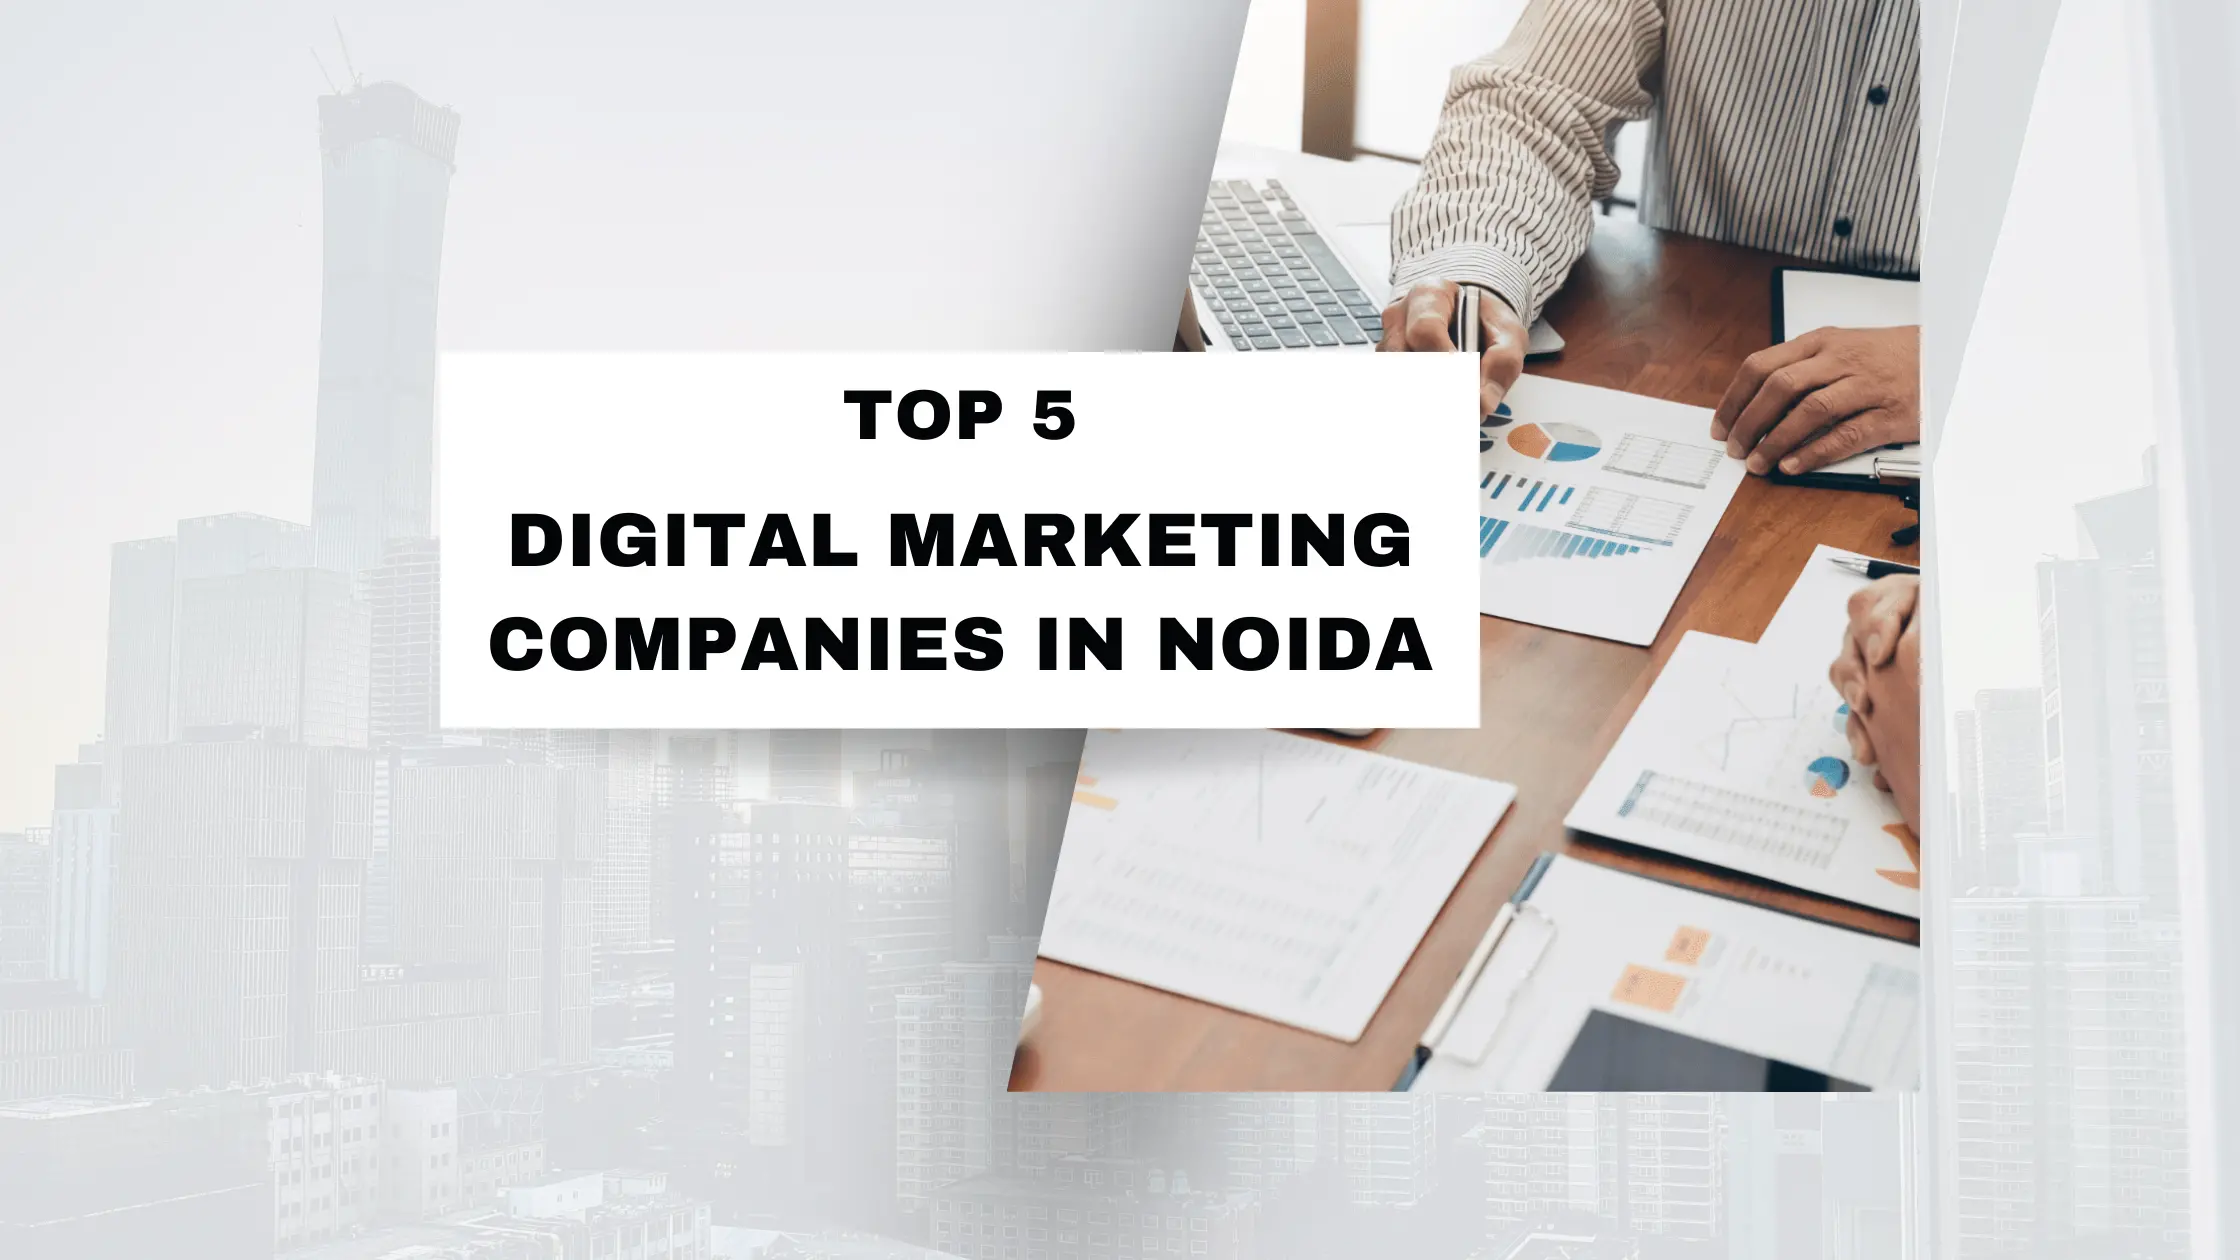 Top 5 Digital Marketing Companies in Noida